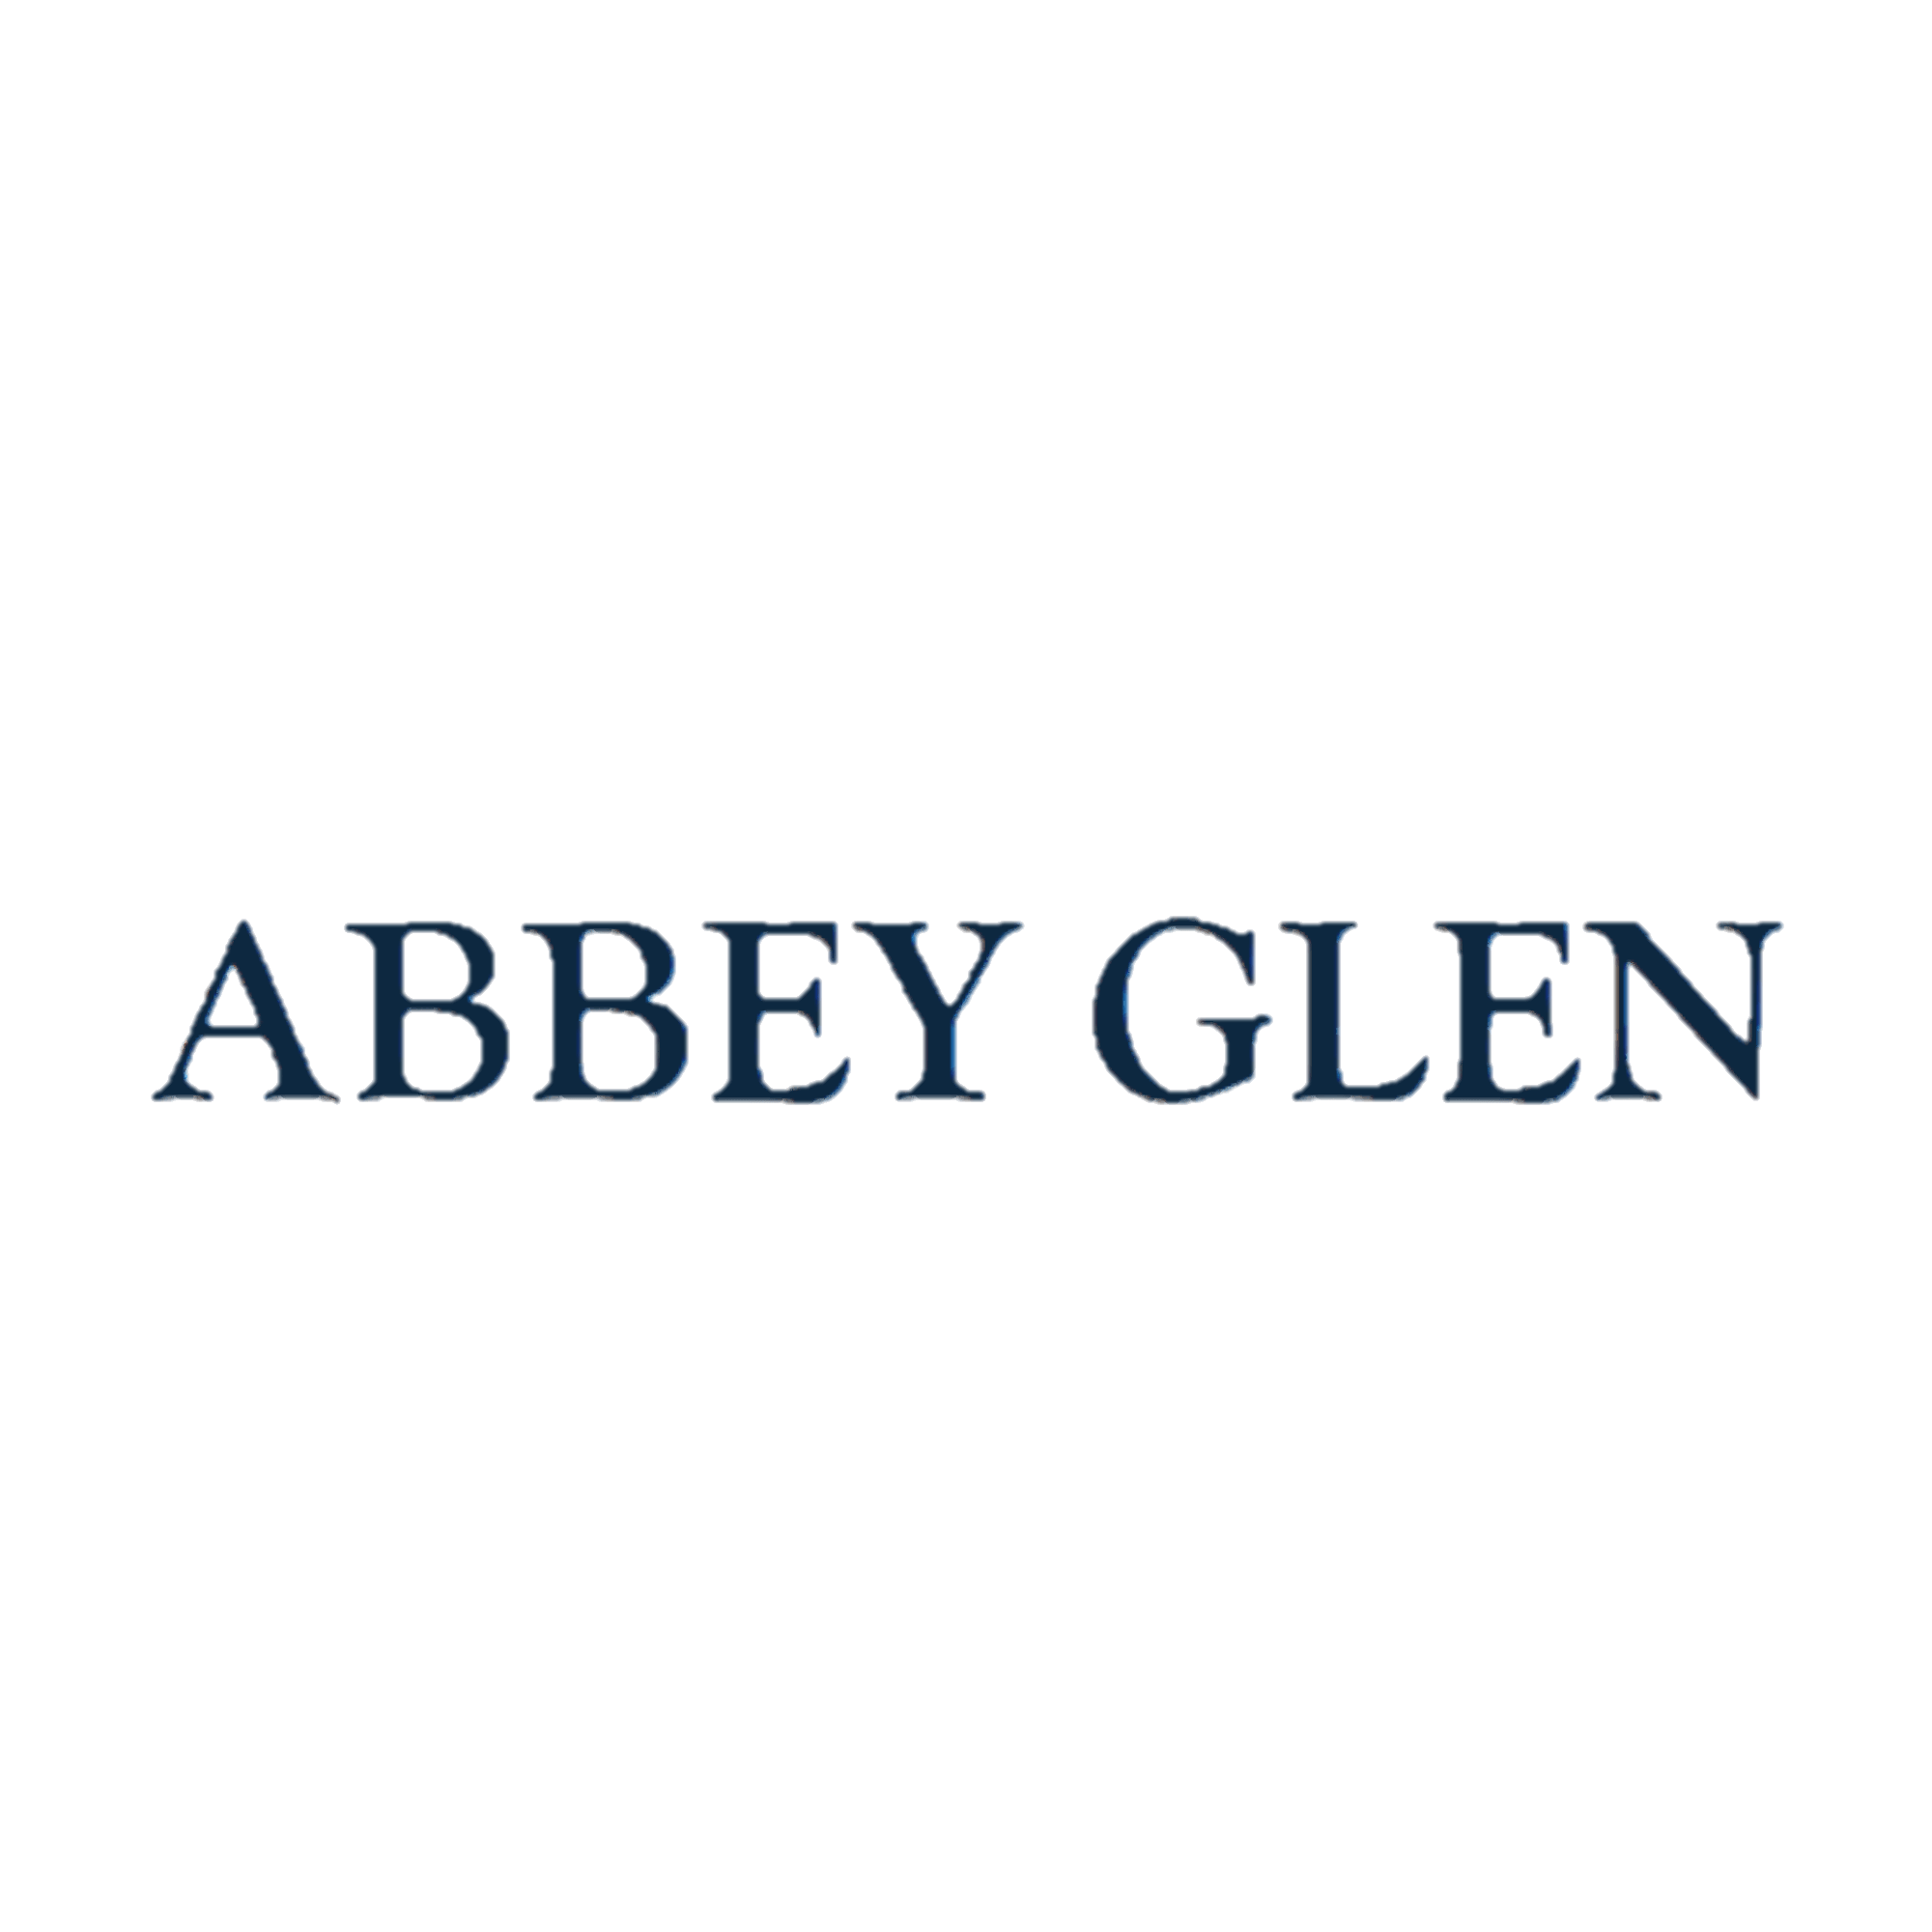 Abbey Glen color